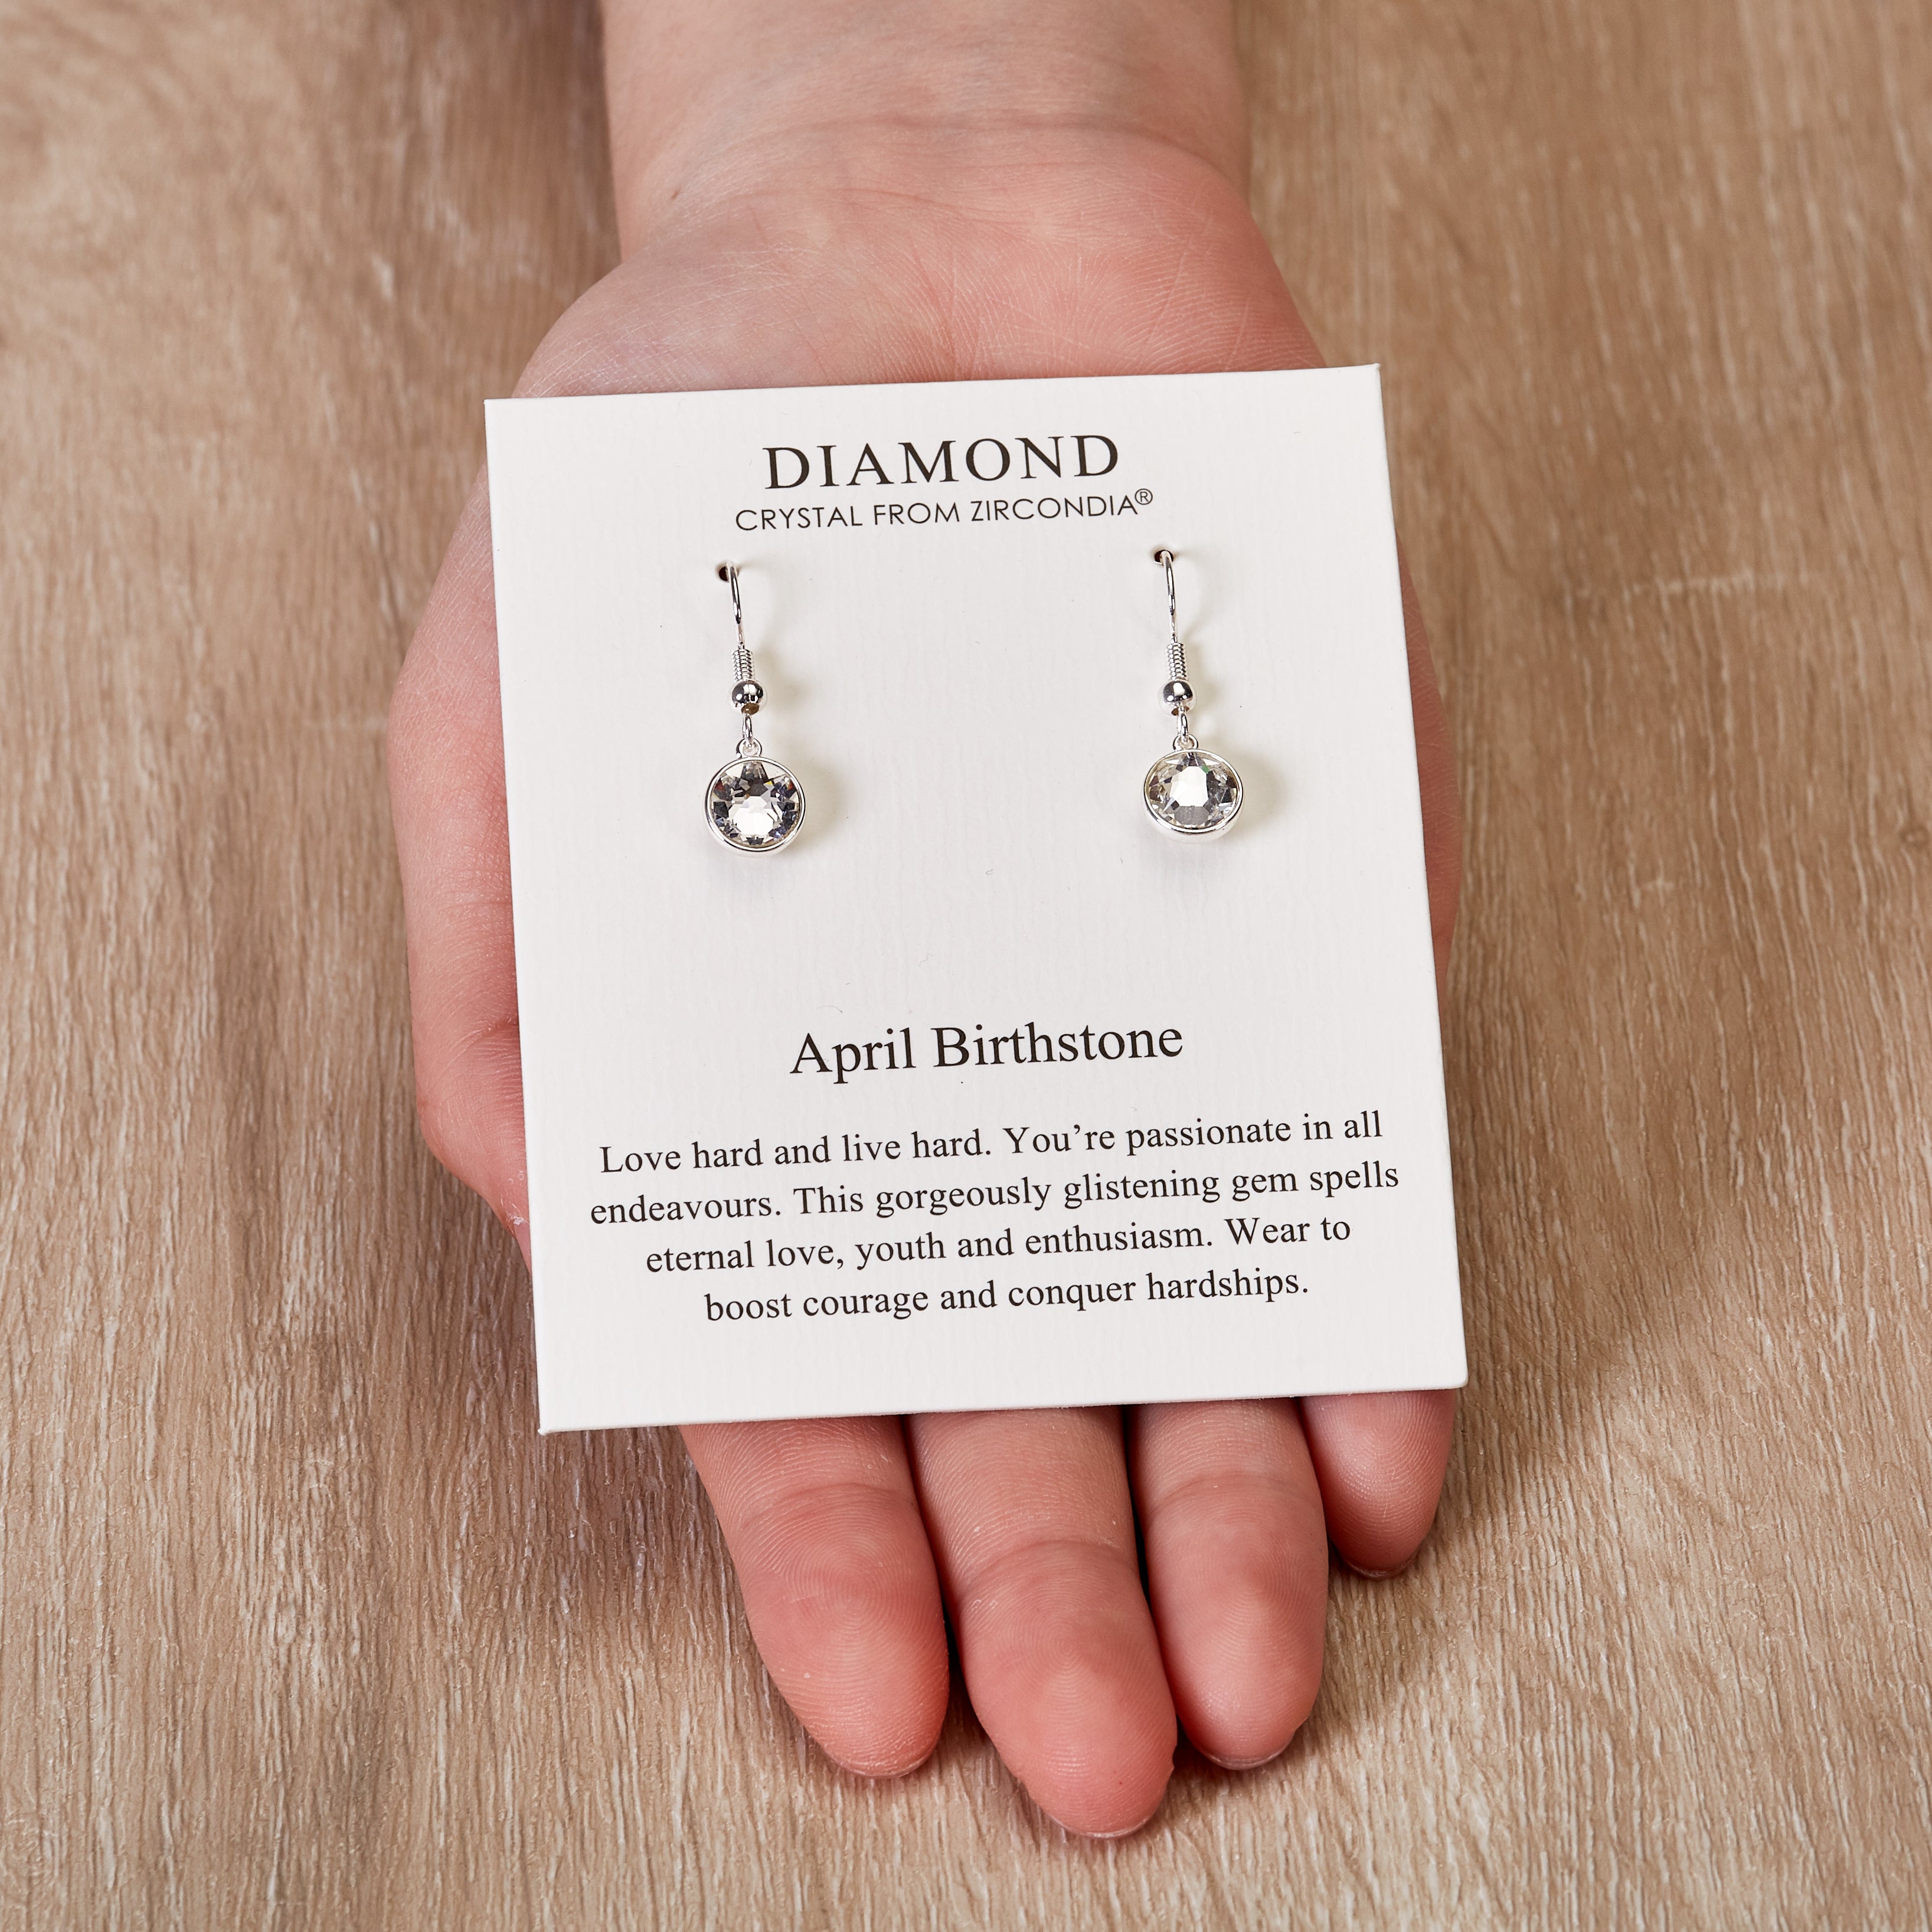 April Birthstone Drop Earrings Created with Diamond Zircondia® Crystals